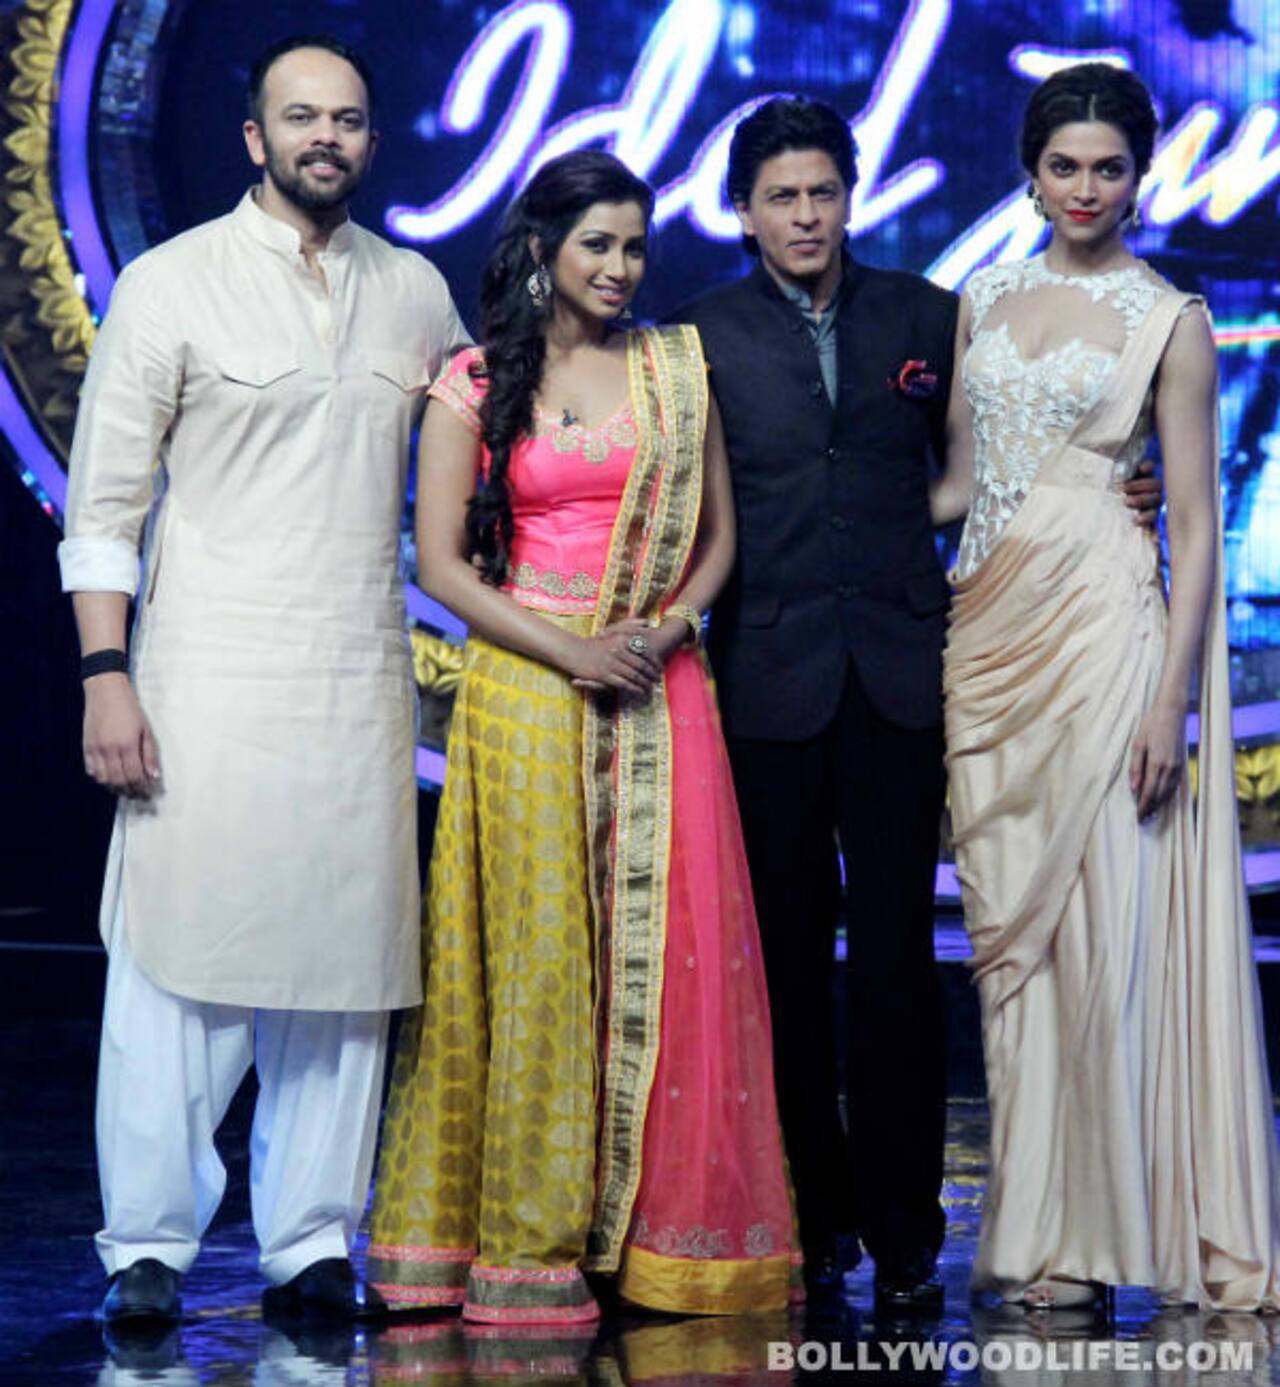 Indian Idol Junior promo: Can Shahrukh Khan and Deepika Padukone really ...